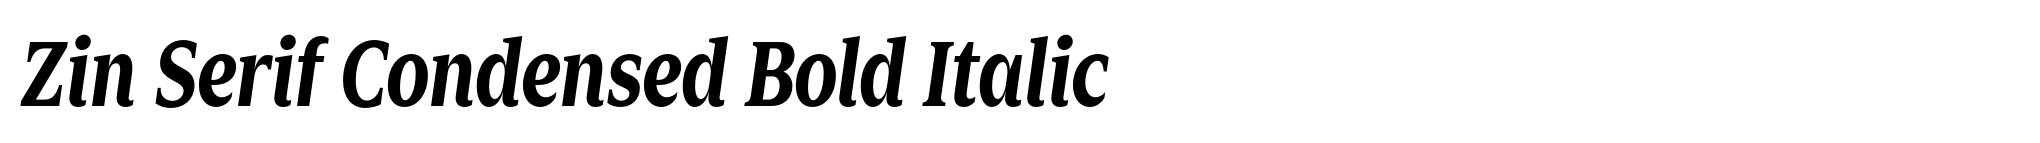 Zin Serif Condensed Bold Italic image